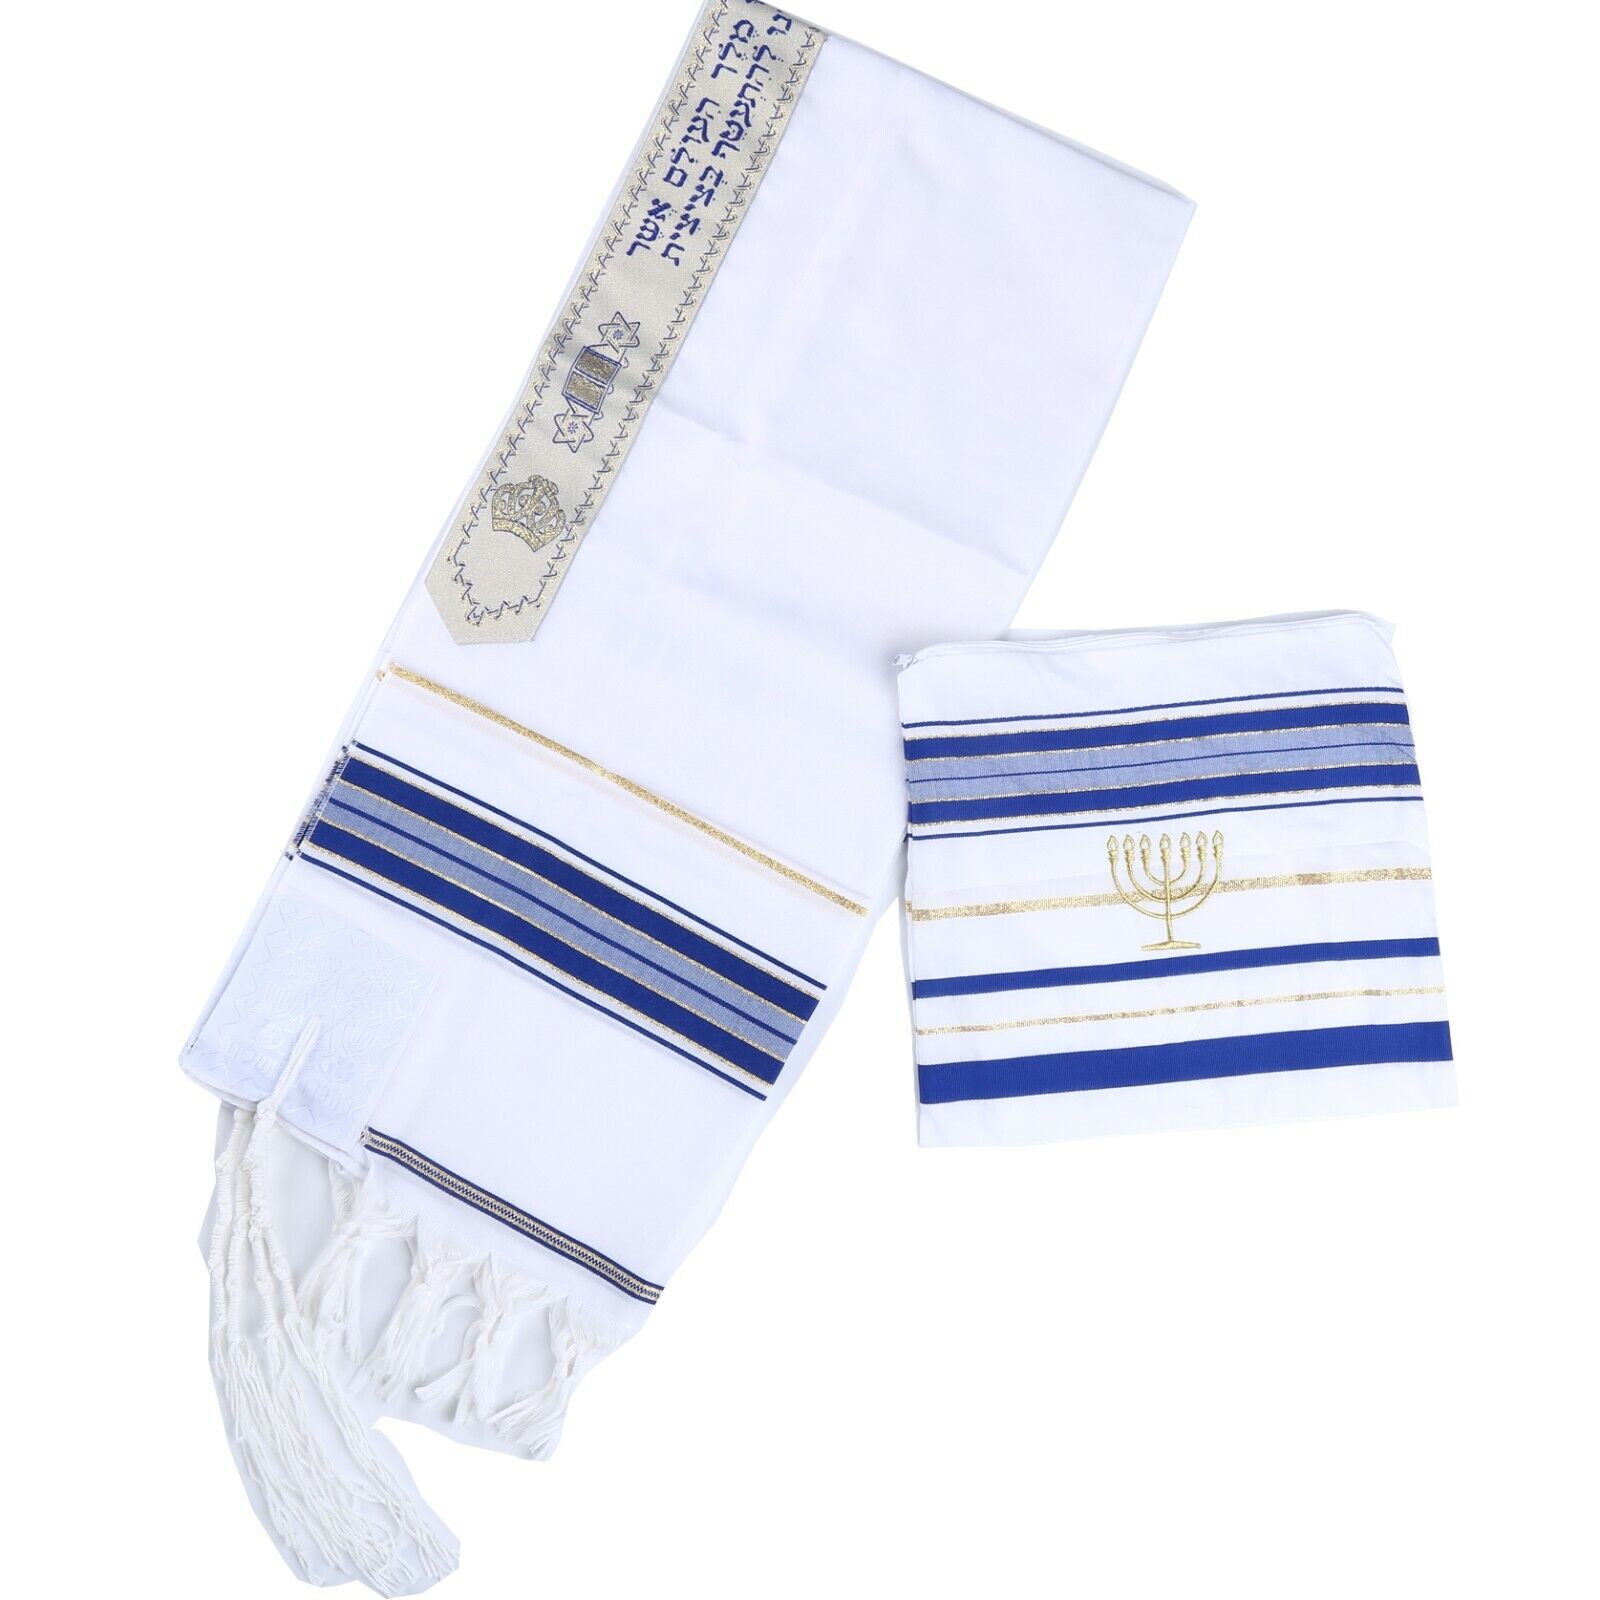 Tallit Prayer Shawl Jewish Gold Blue Made in Israel with Bag Gift Talit Tallits 